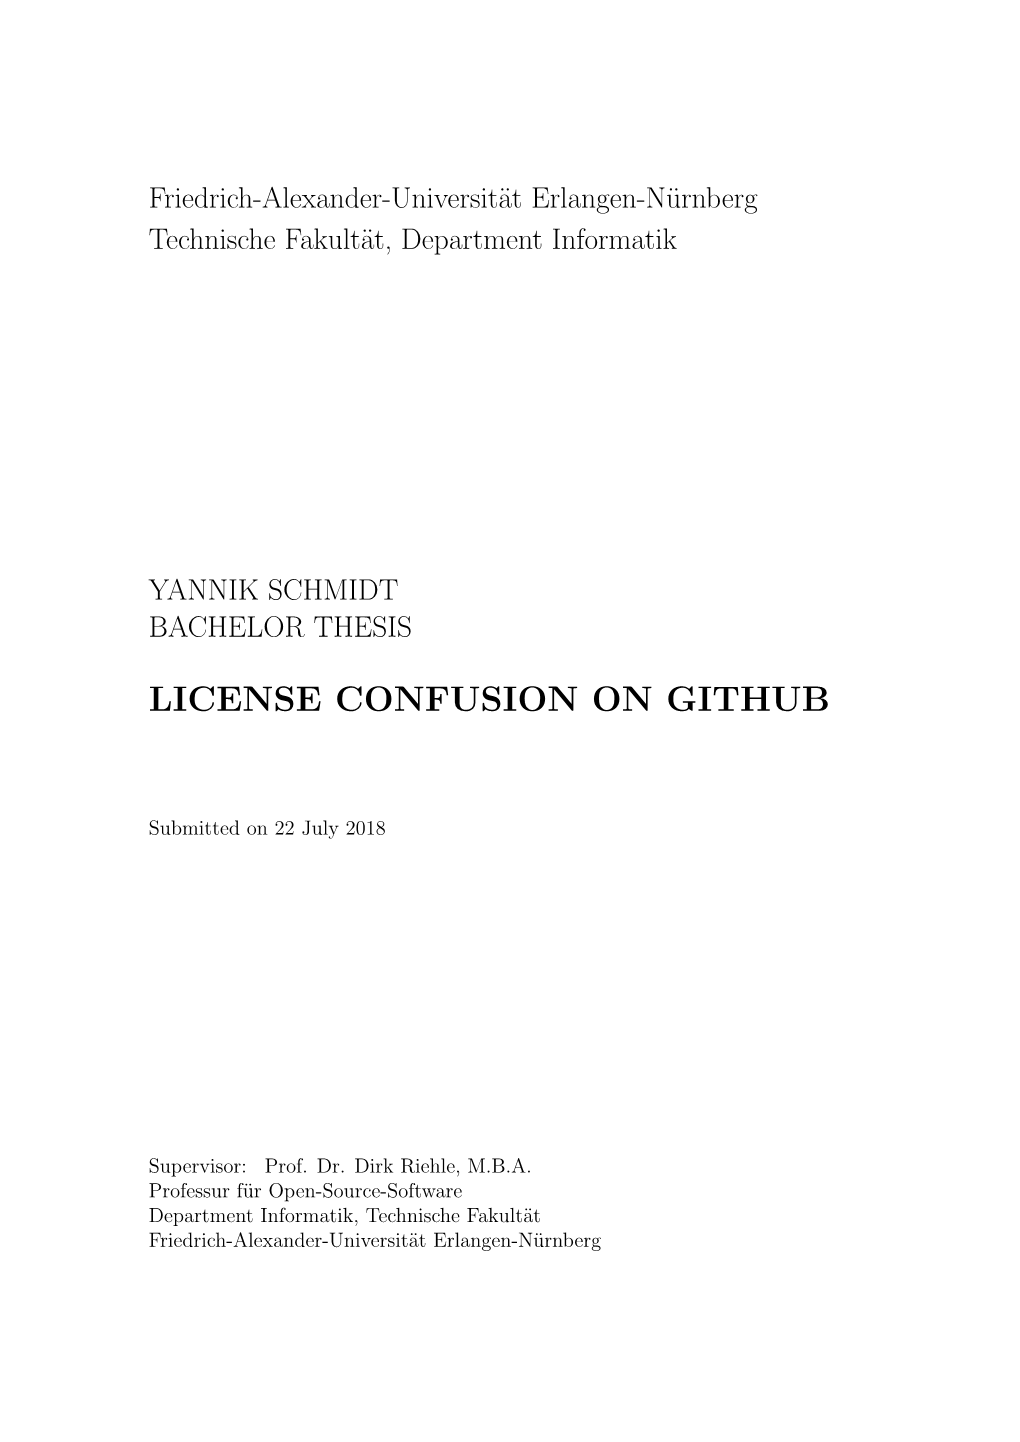 License Confusion on Github